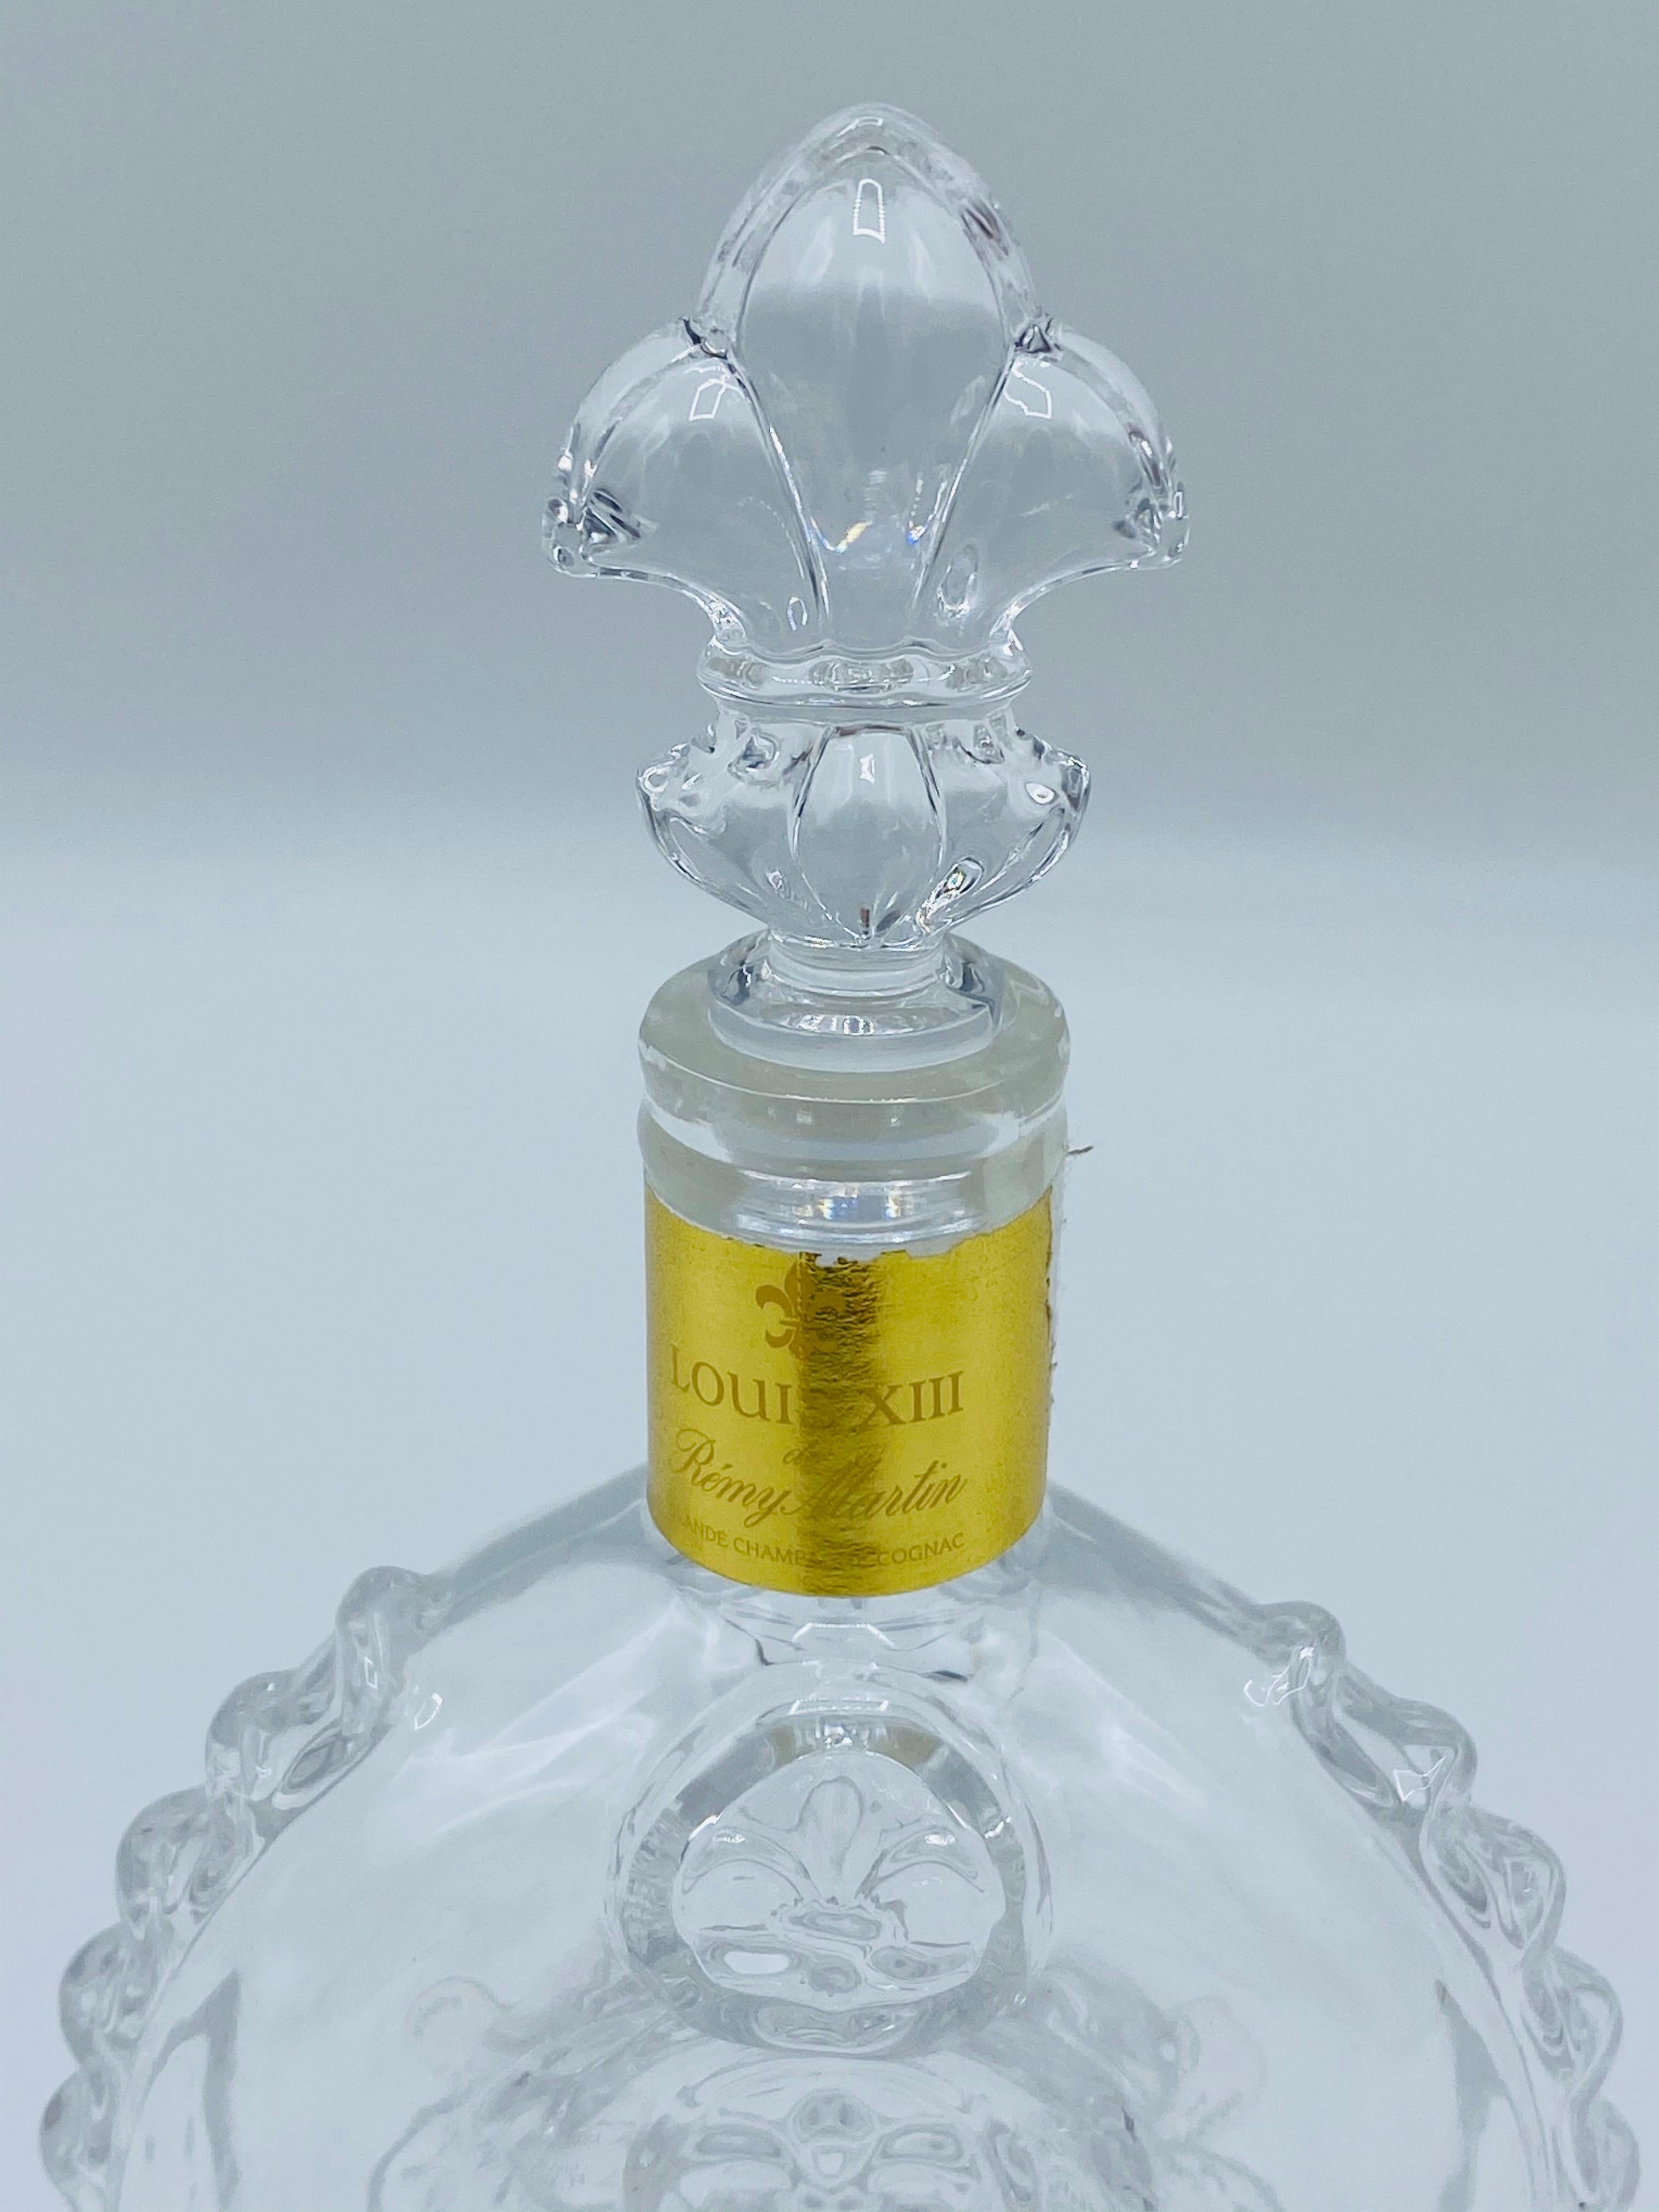 Vintage Baccarat Crystal Louis XIII Remy Martin Cognac Liquor Decanter Set:: 50ml 9